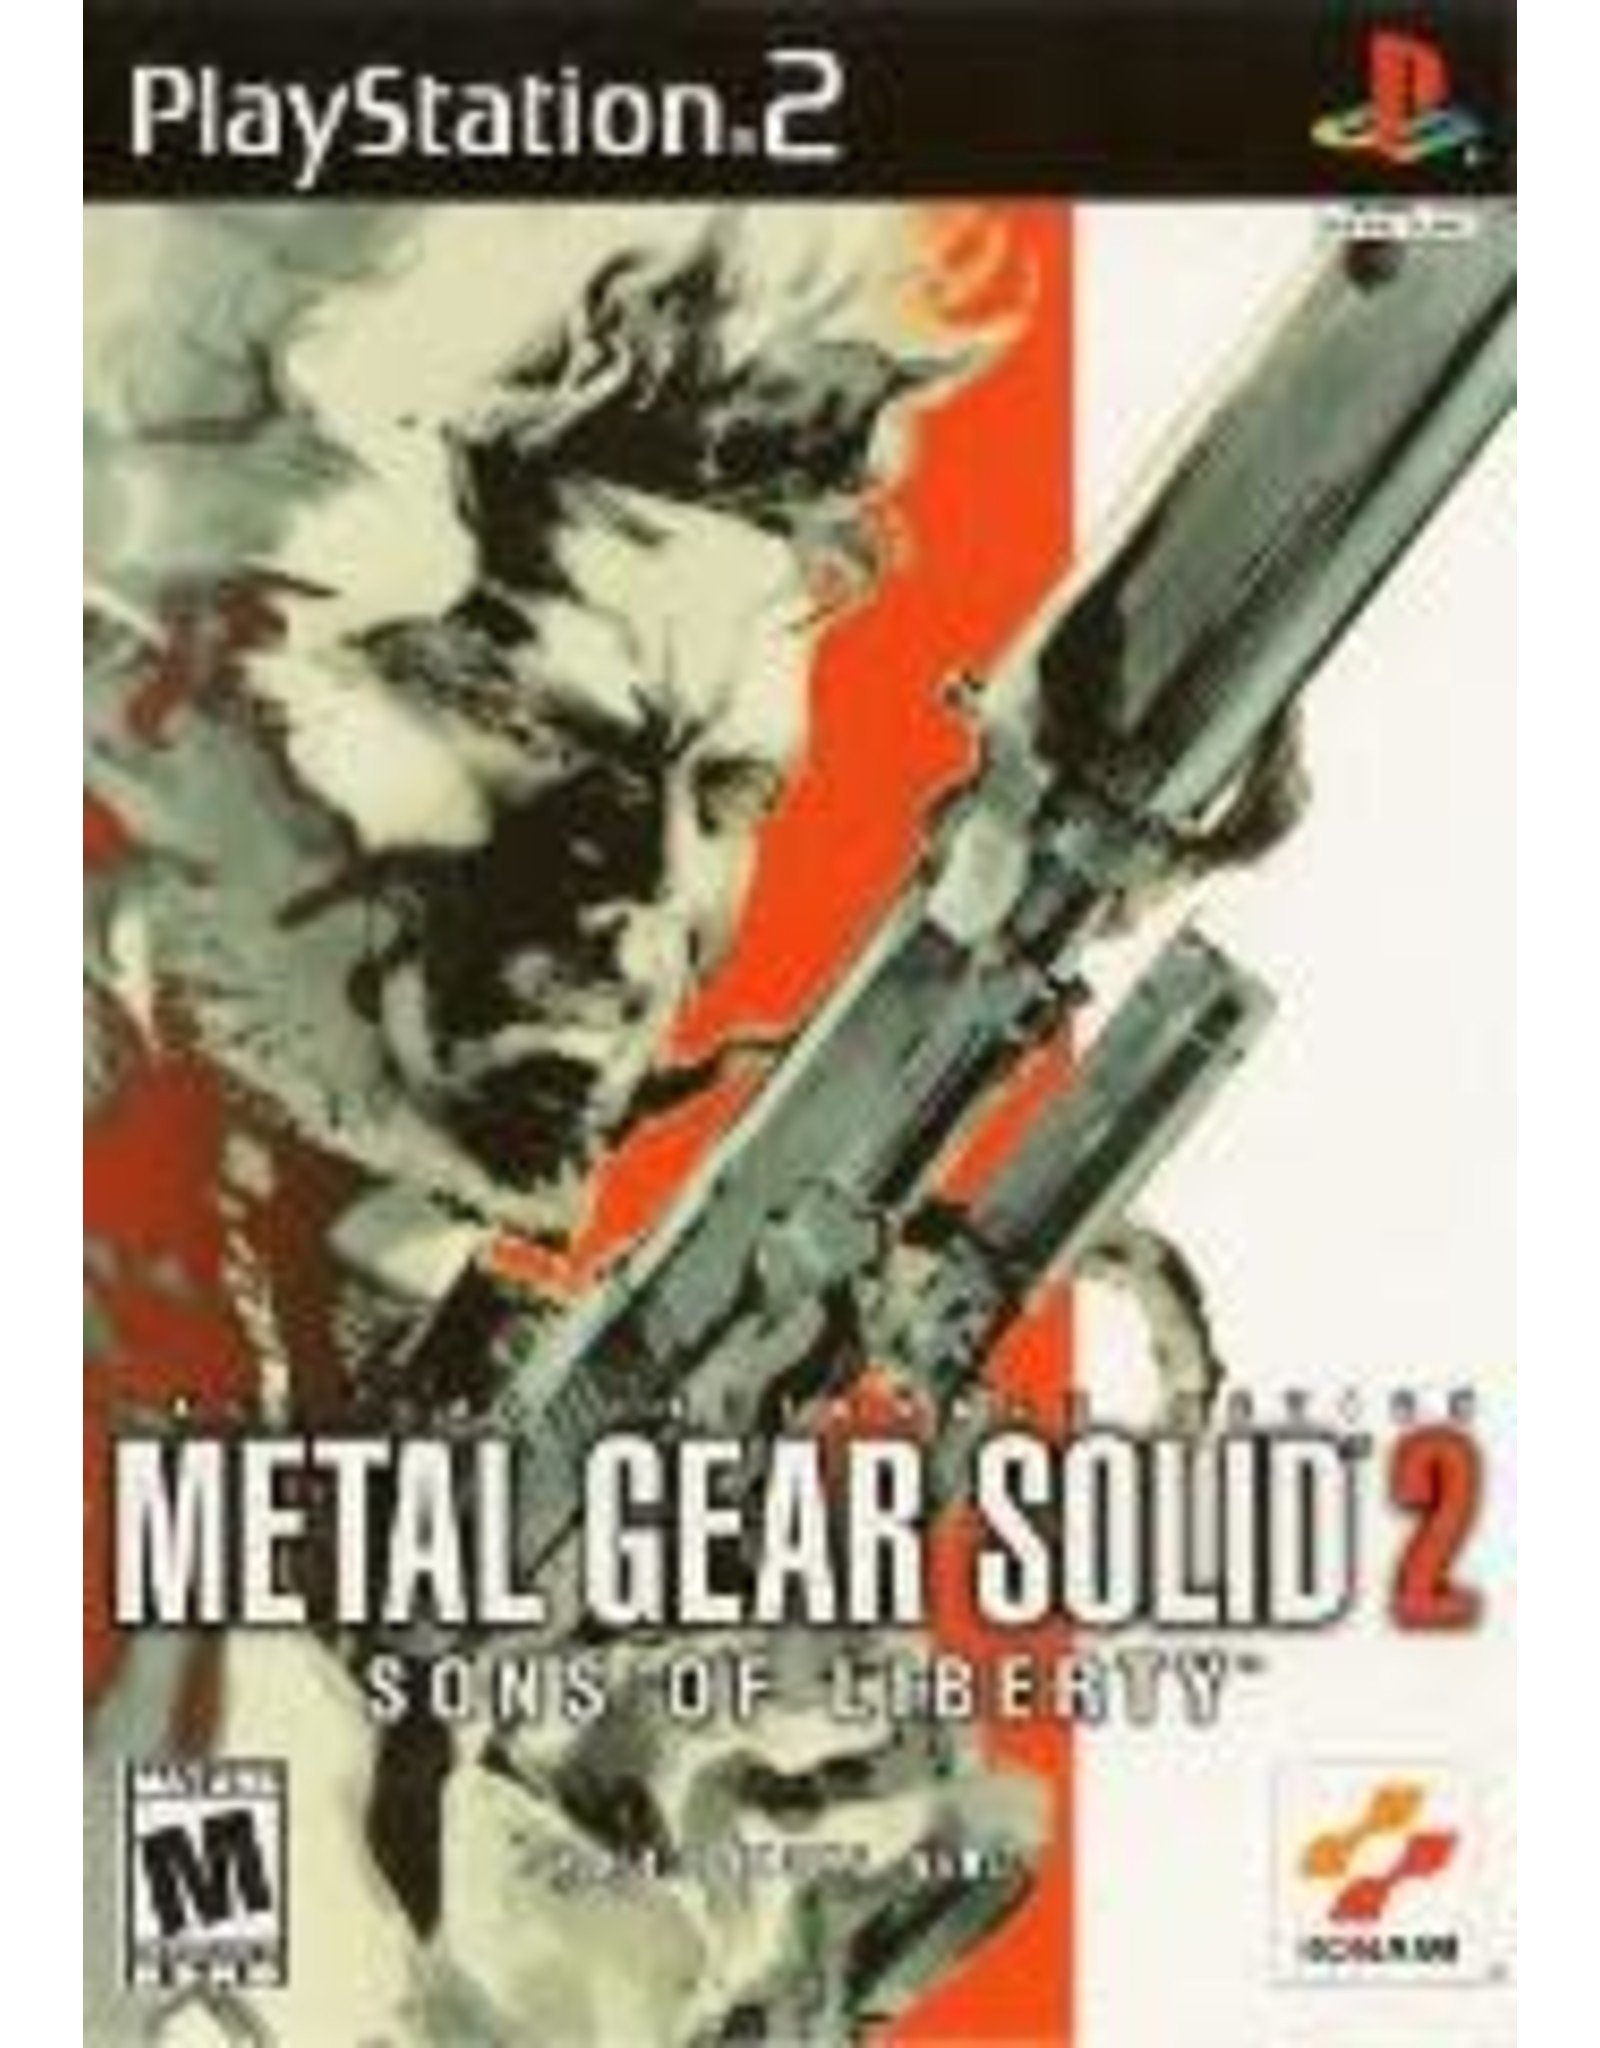 Playstation 2 Metal Gear Solid 2 Sons of Liberty (No Manual